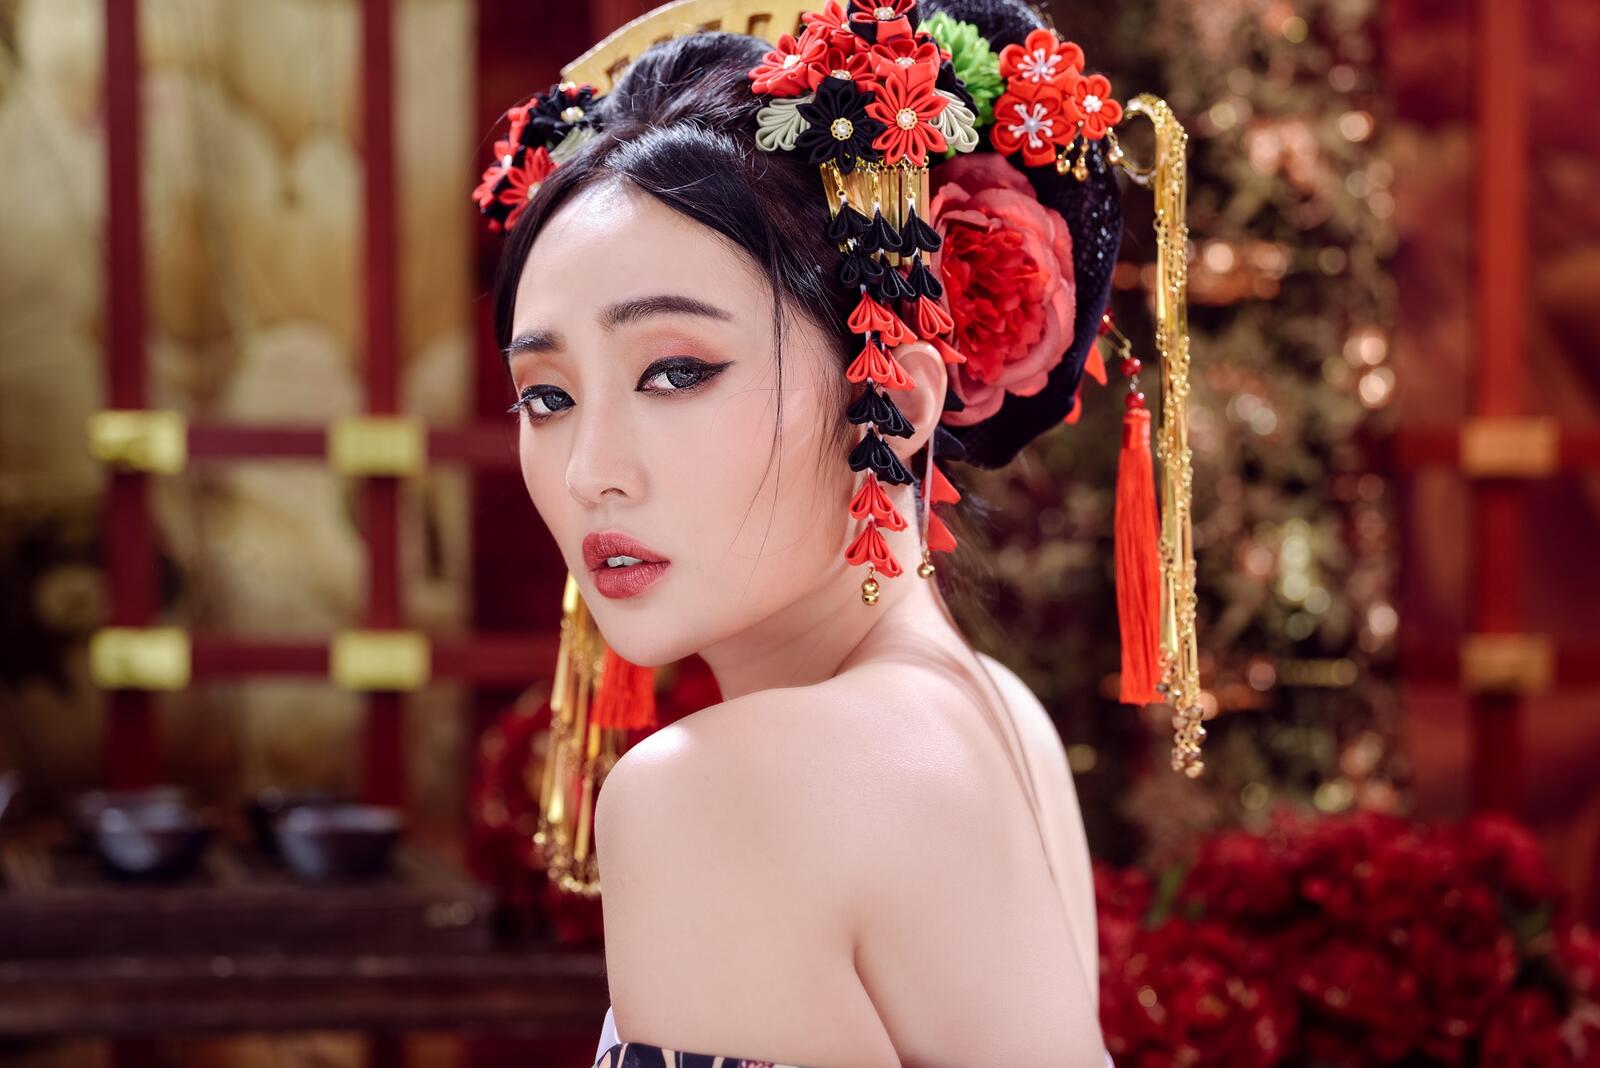 Wallpapers girl beautiful make-up asian models on the desktop